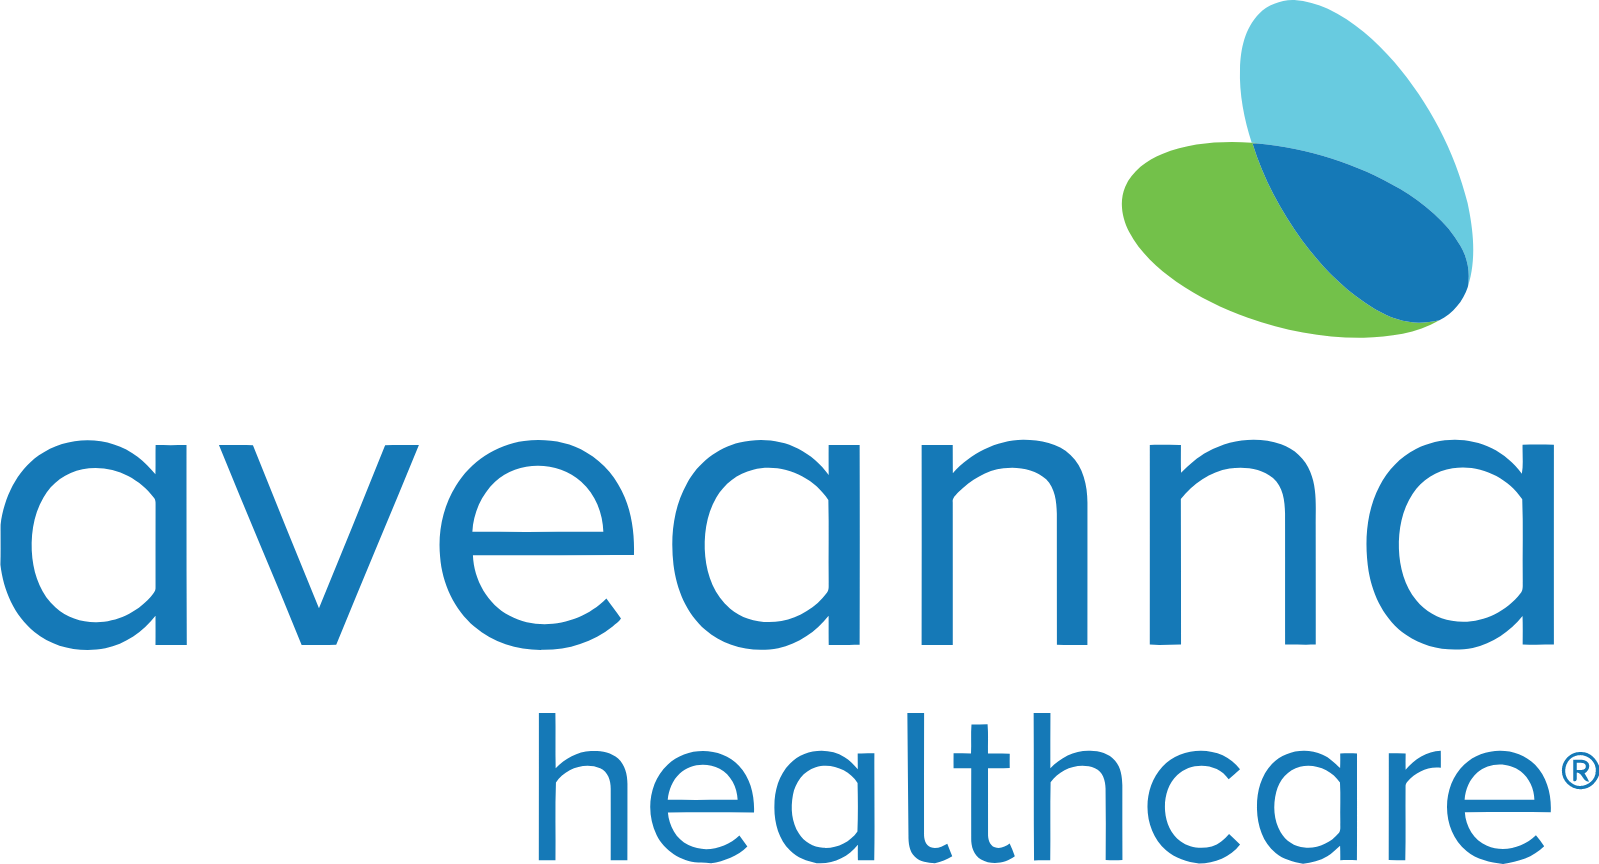 Aveanna Healthcare logo large (transparent PNG)